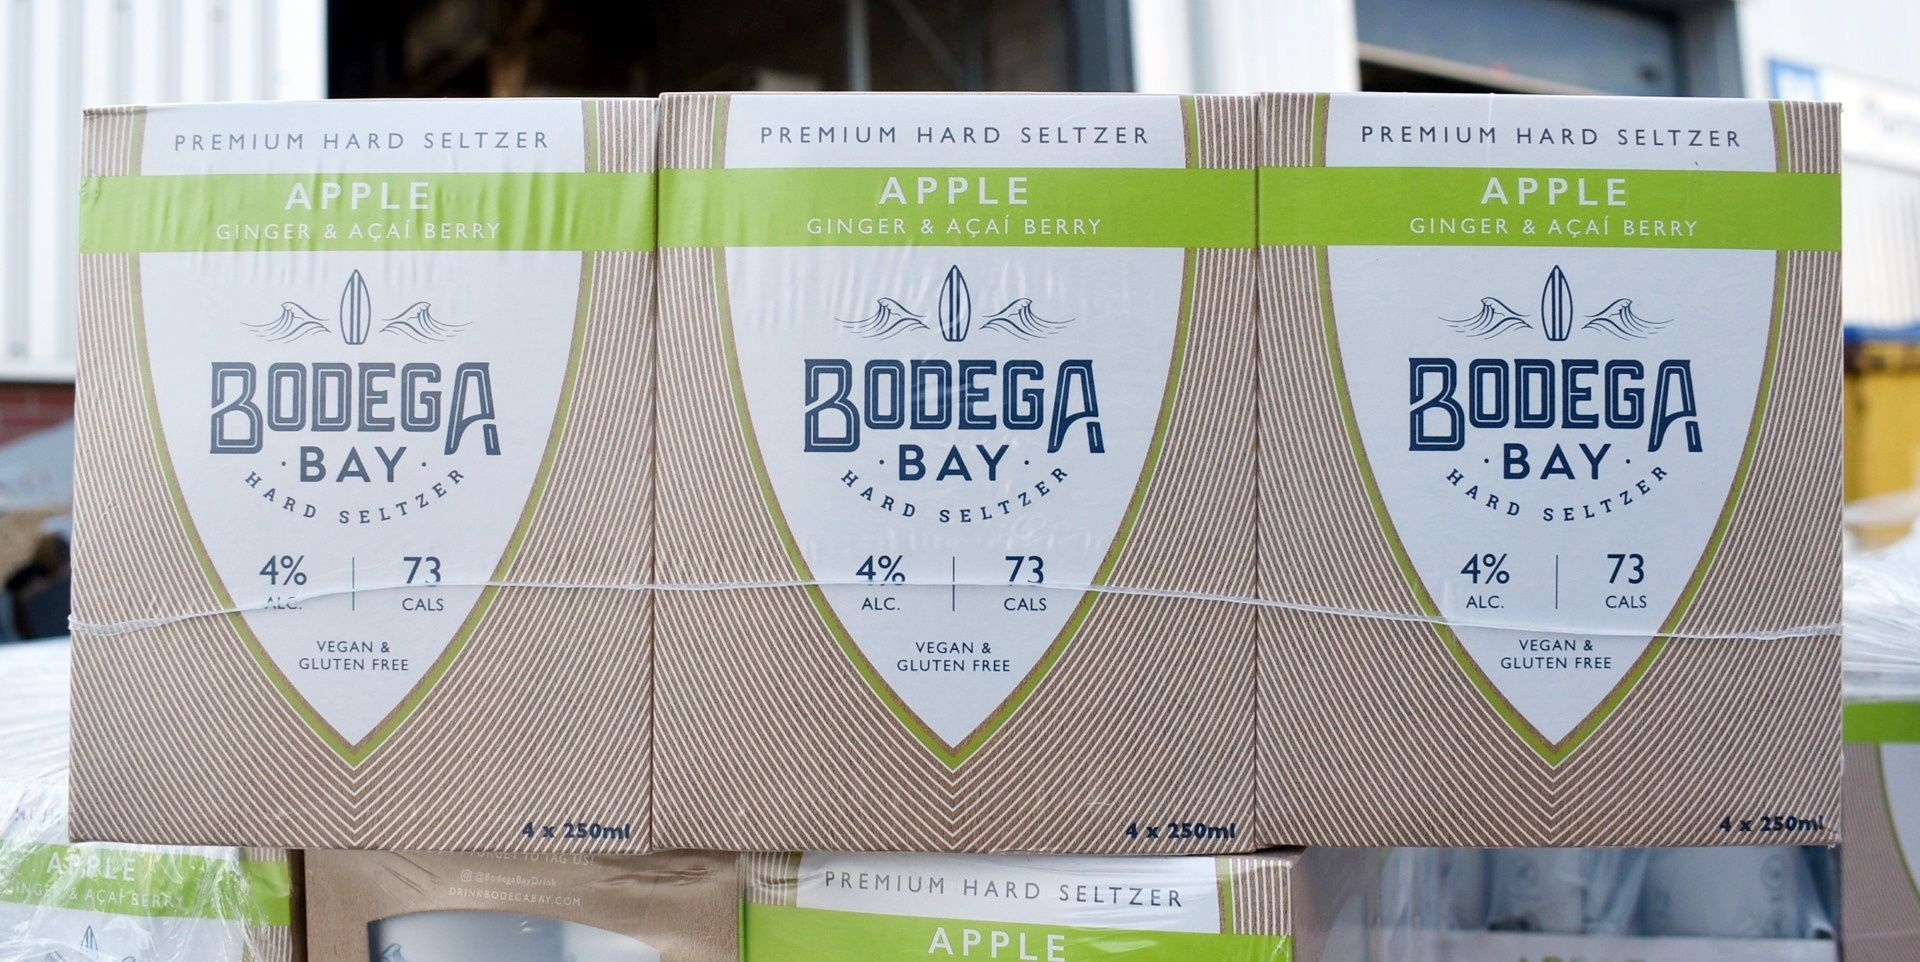 24 x Bodega Bay Hard Seltzer 250ml Alcoholic Sparkling Water Drinks - Apple Ginger & Acai Berry - 4% - Image 5 of 10